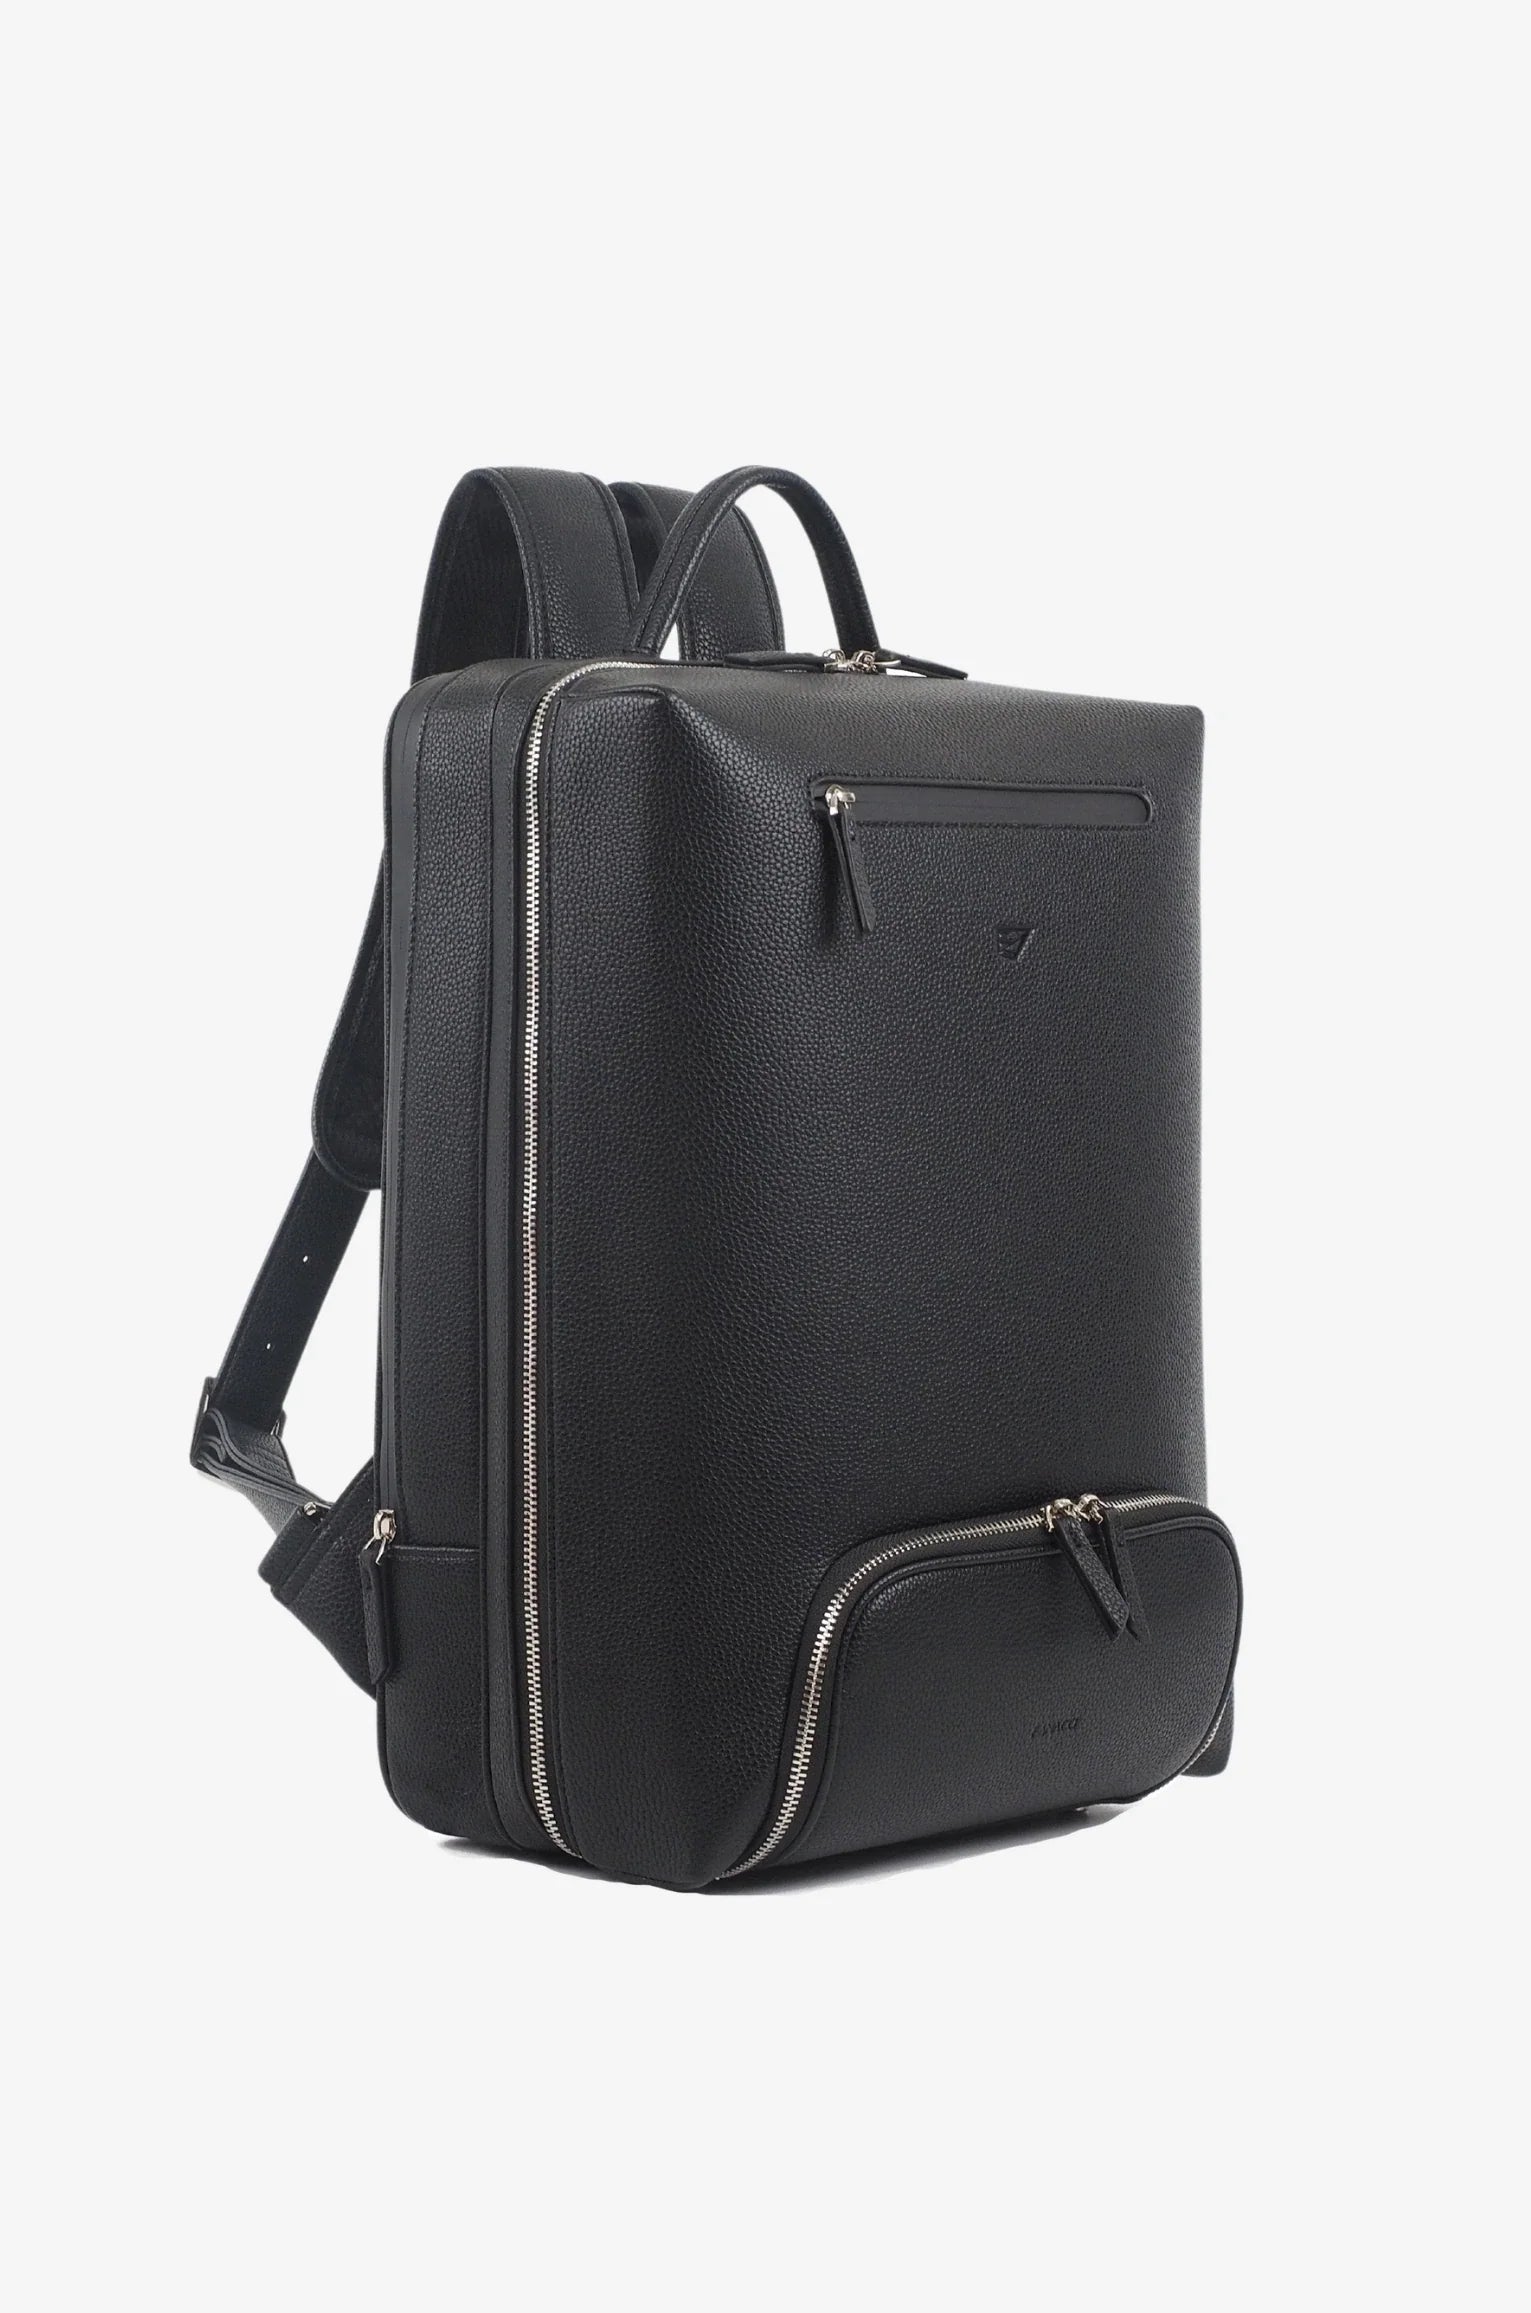 Innovator-20L Organisational Backpack